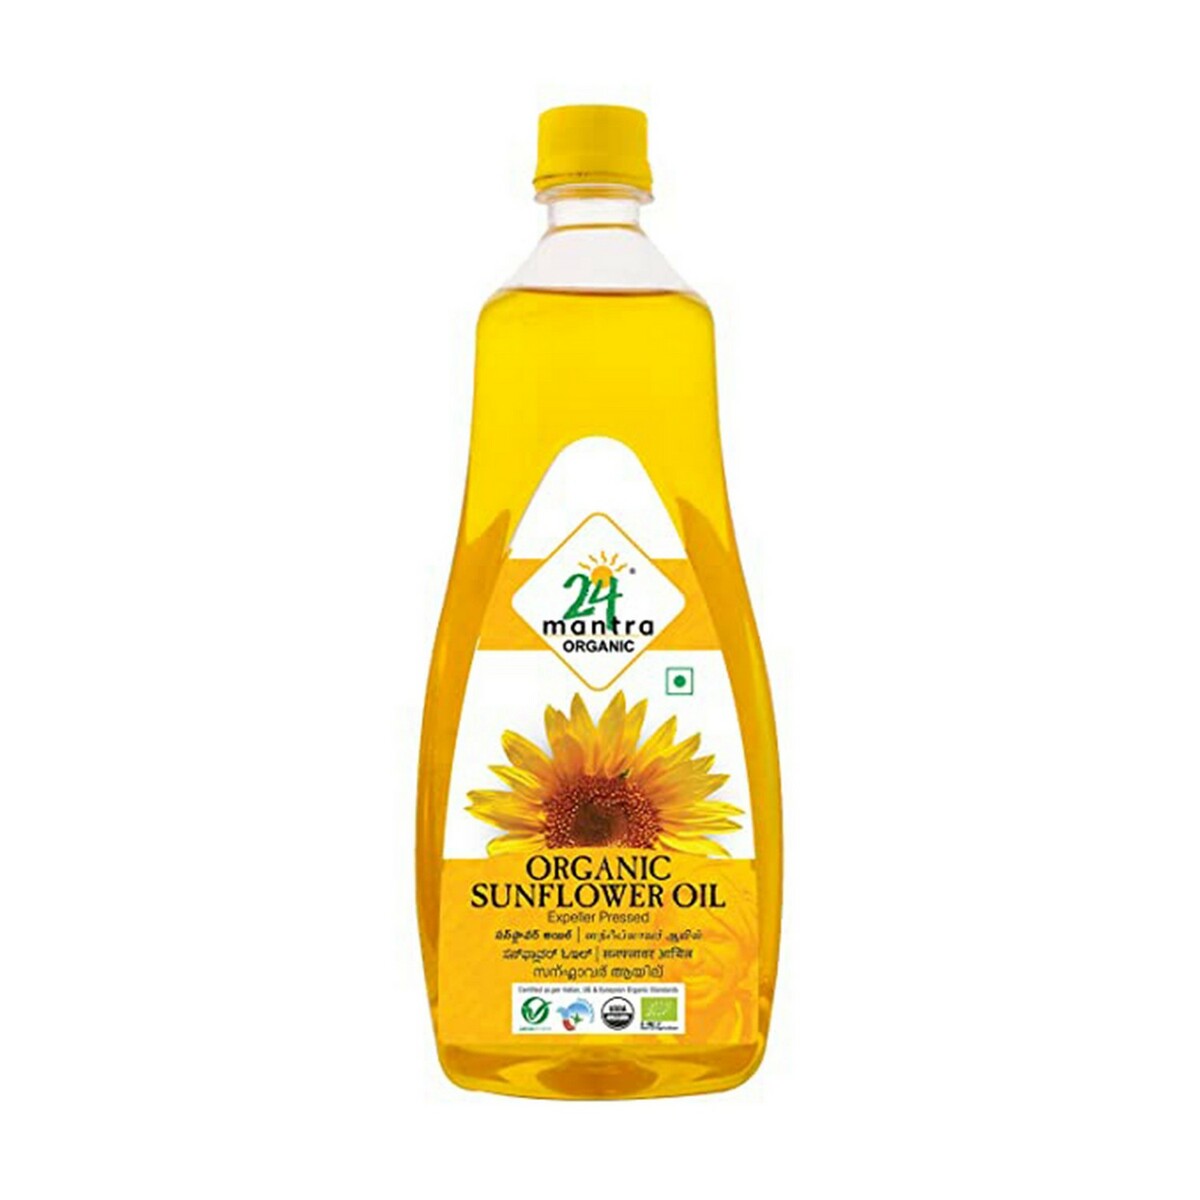 24M Cold Pressed Sunflower Oil 1Litre